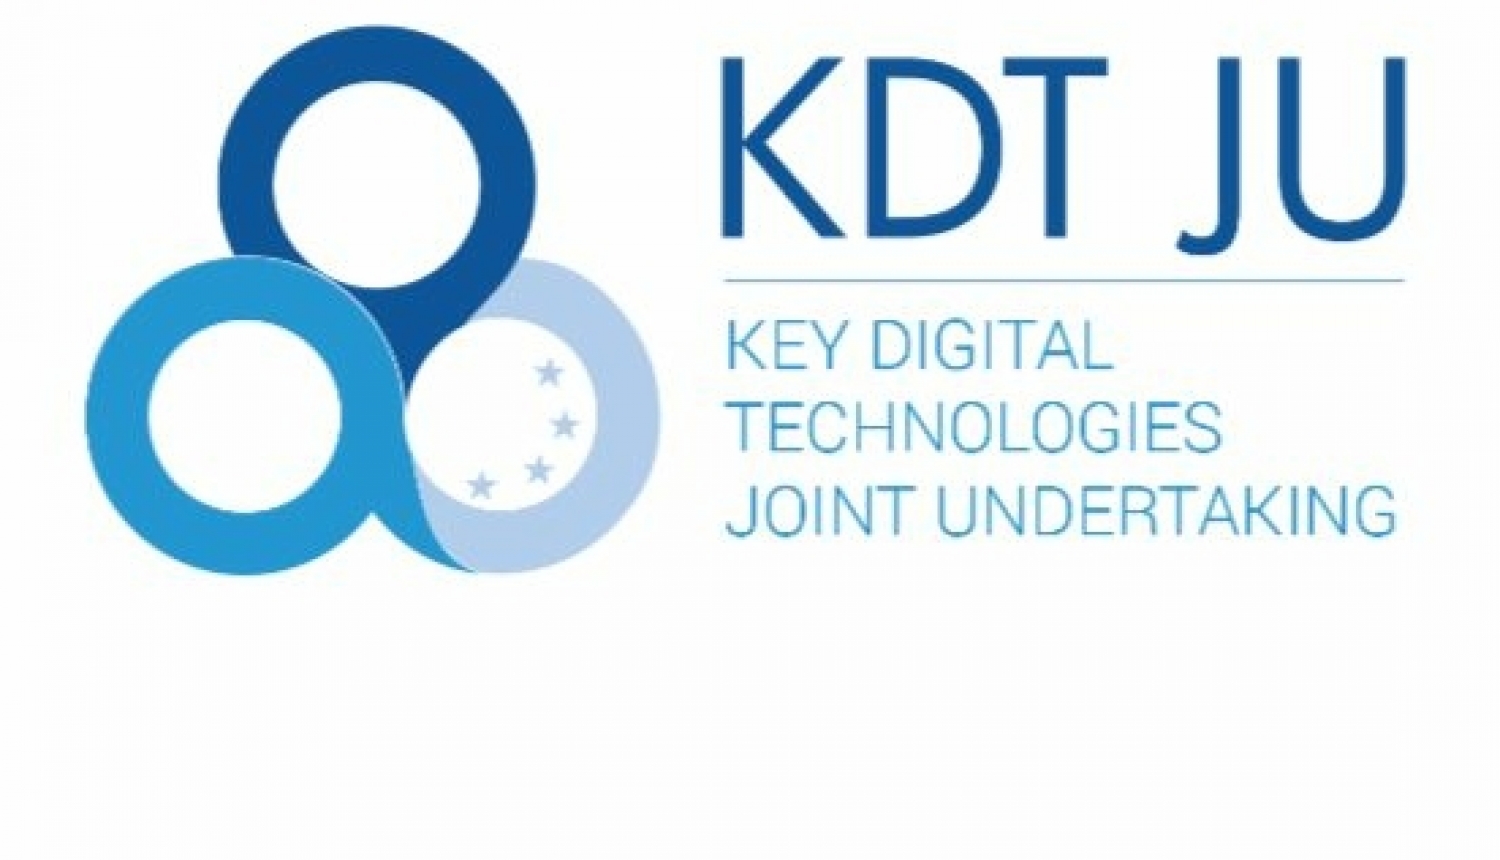 Key Digital Technologies JU workshops